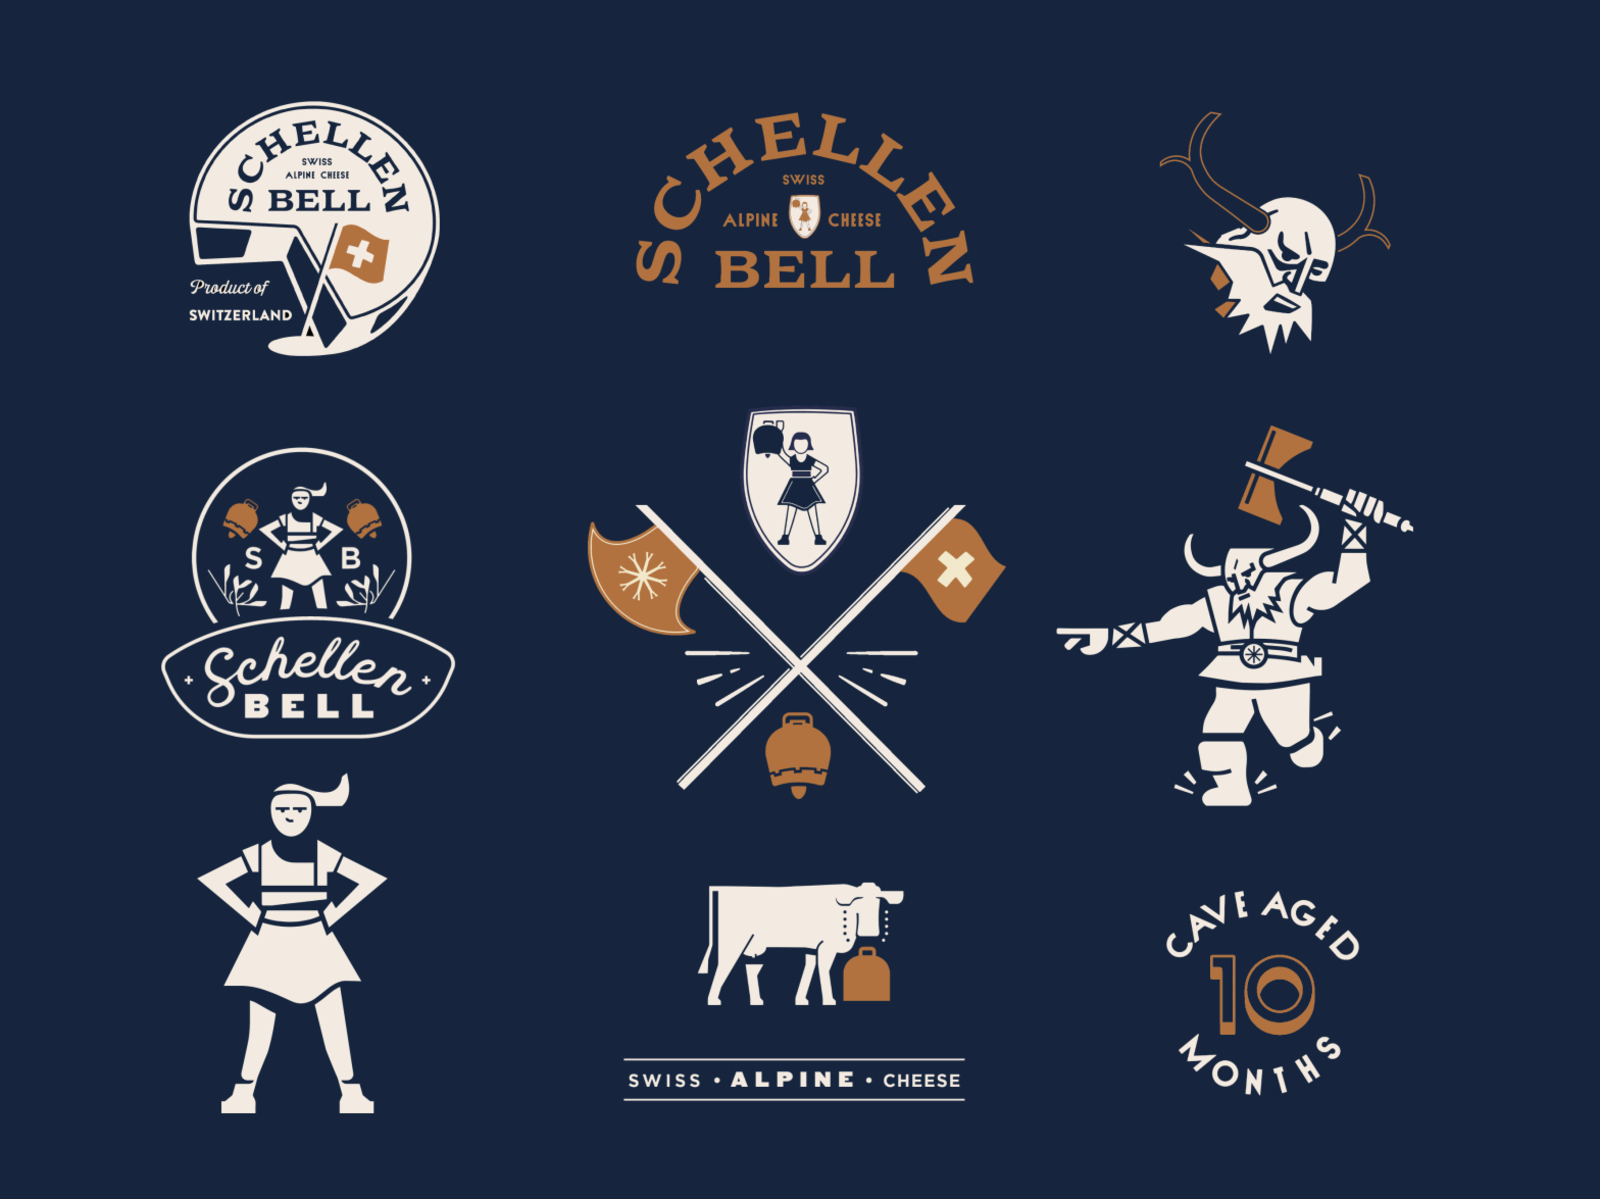 close-up-zeki-michael-schellen-bell-design-swiss-cheese-gourmet-food-industry-branding-brand-book-exploration-concepts.jpg